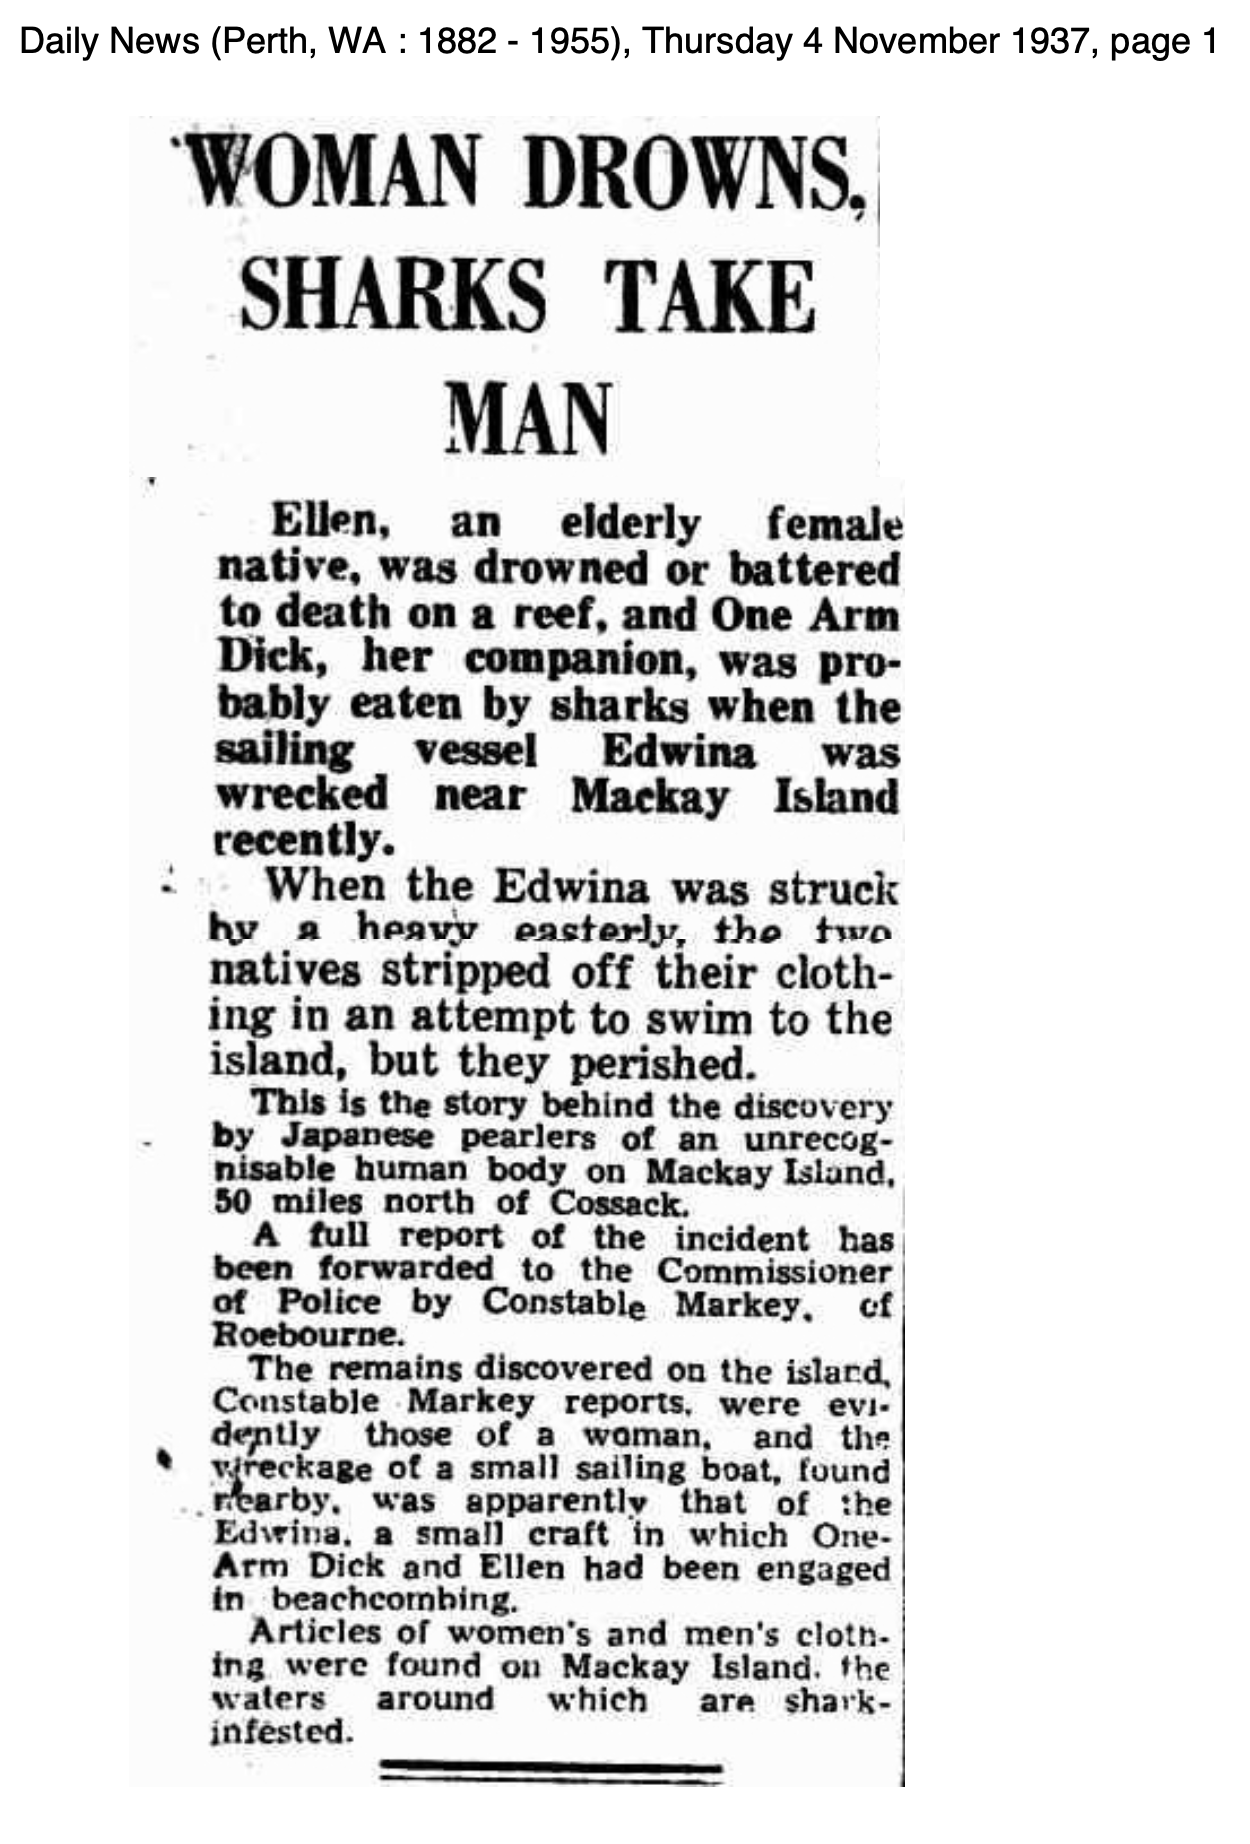 The Daily News, Thursday 4 November 1937